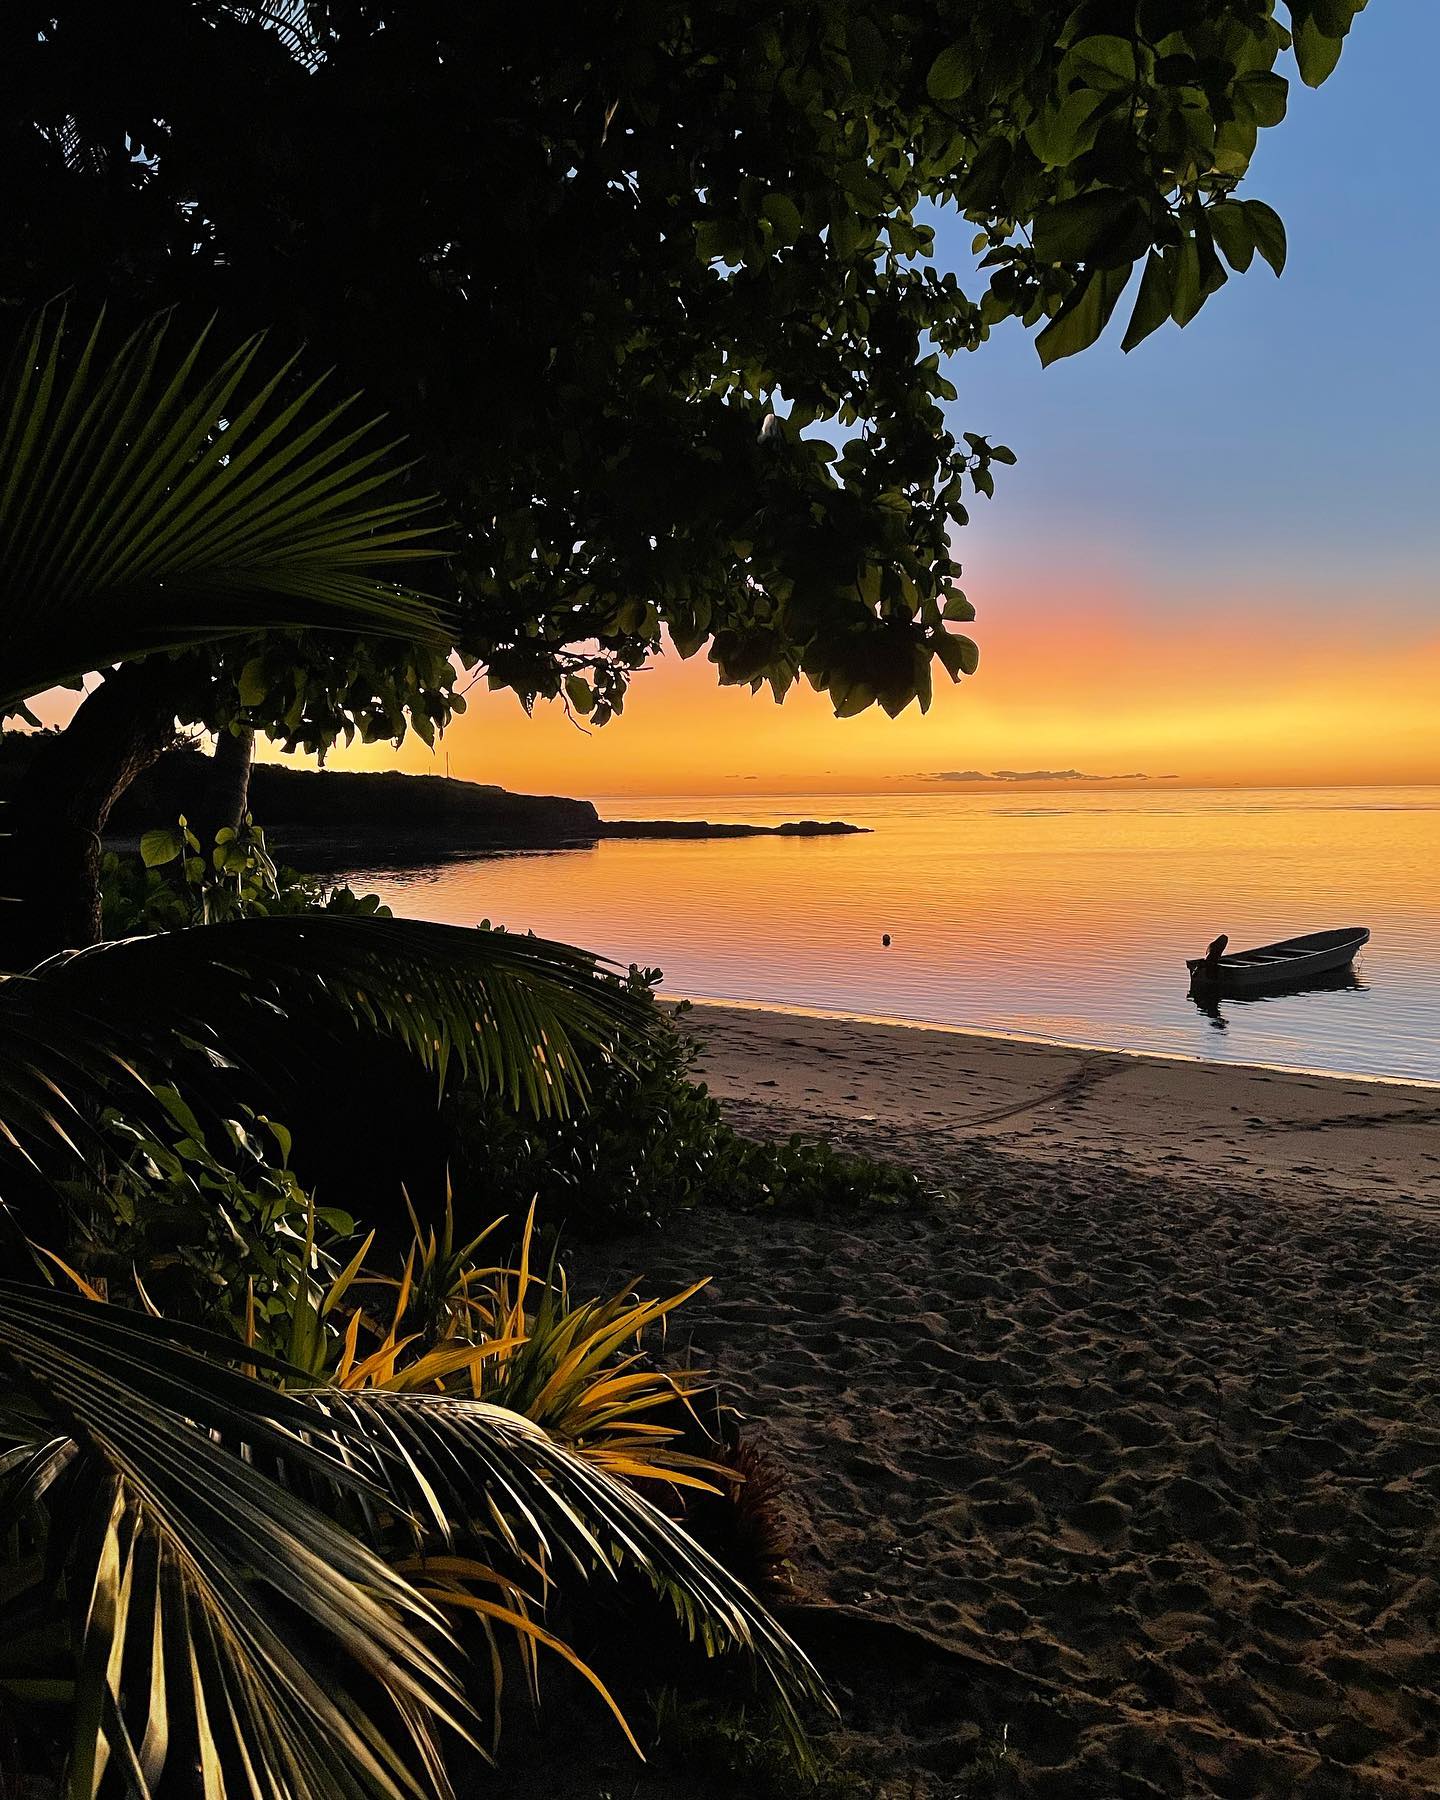 Wow this sunset while I stayed on my most favorite island in Fiji.. 
Just magical 😍

#sunsetcaptures #fijiislands #roundtheworldtrip #wereldreis #barefootmantafiji #fijitime #reizen #wereldreiziger #barefootmantaisland #travelerlife #beachfinds #fijiairways #sunset_pics #wandergram #nofilter